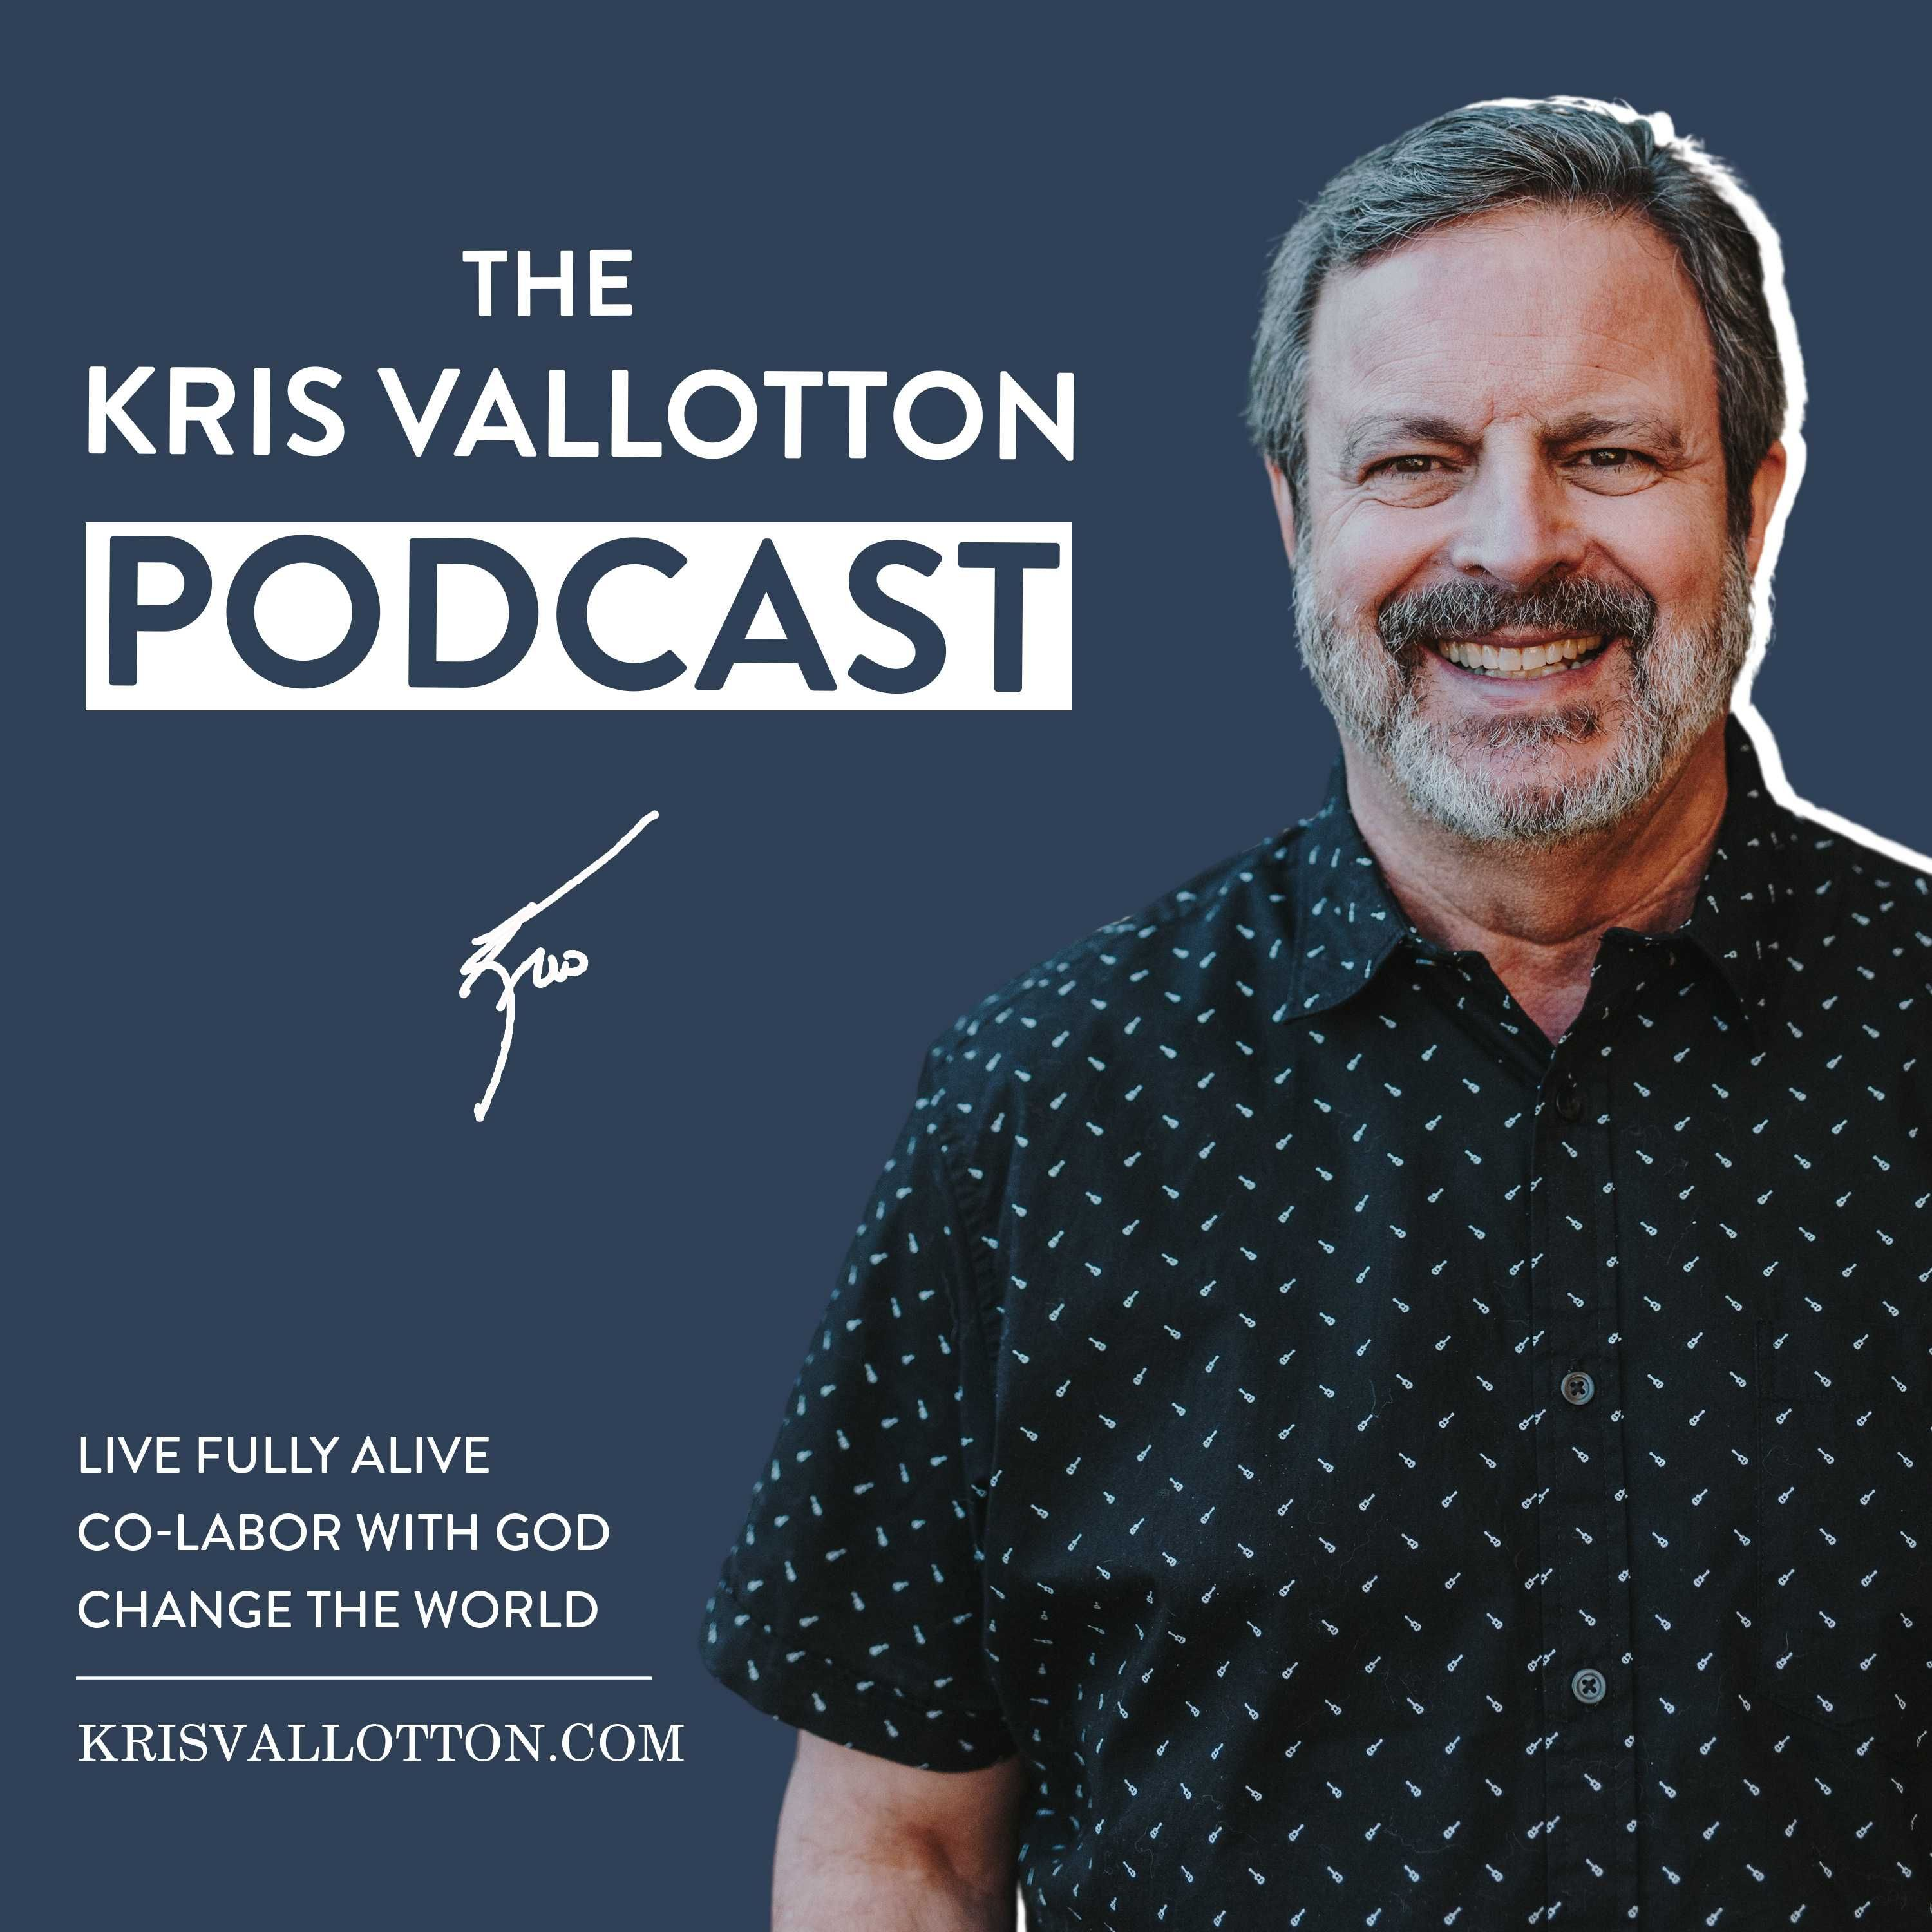 The Kris Vallotton Podcast